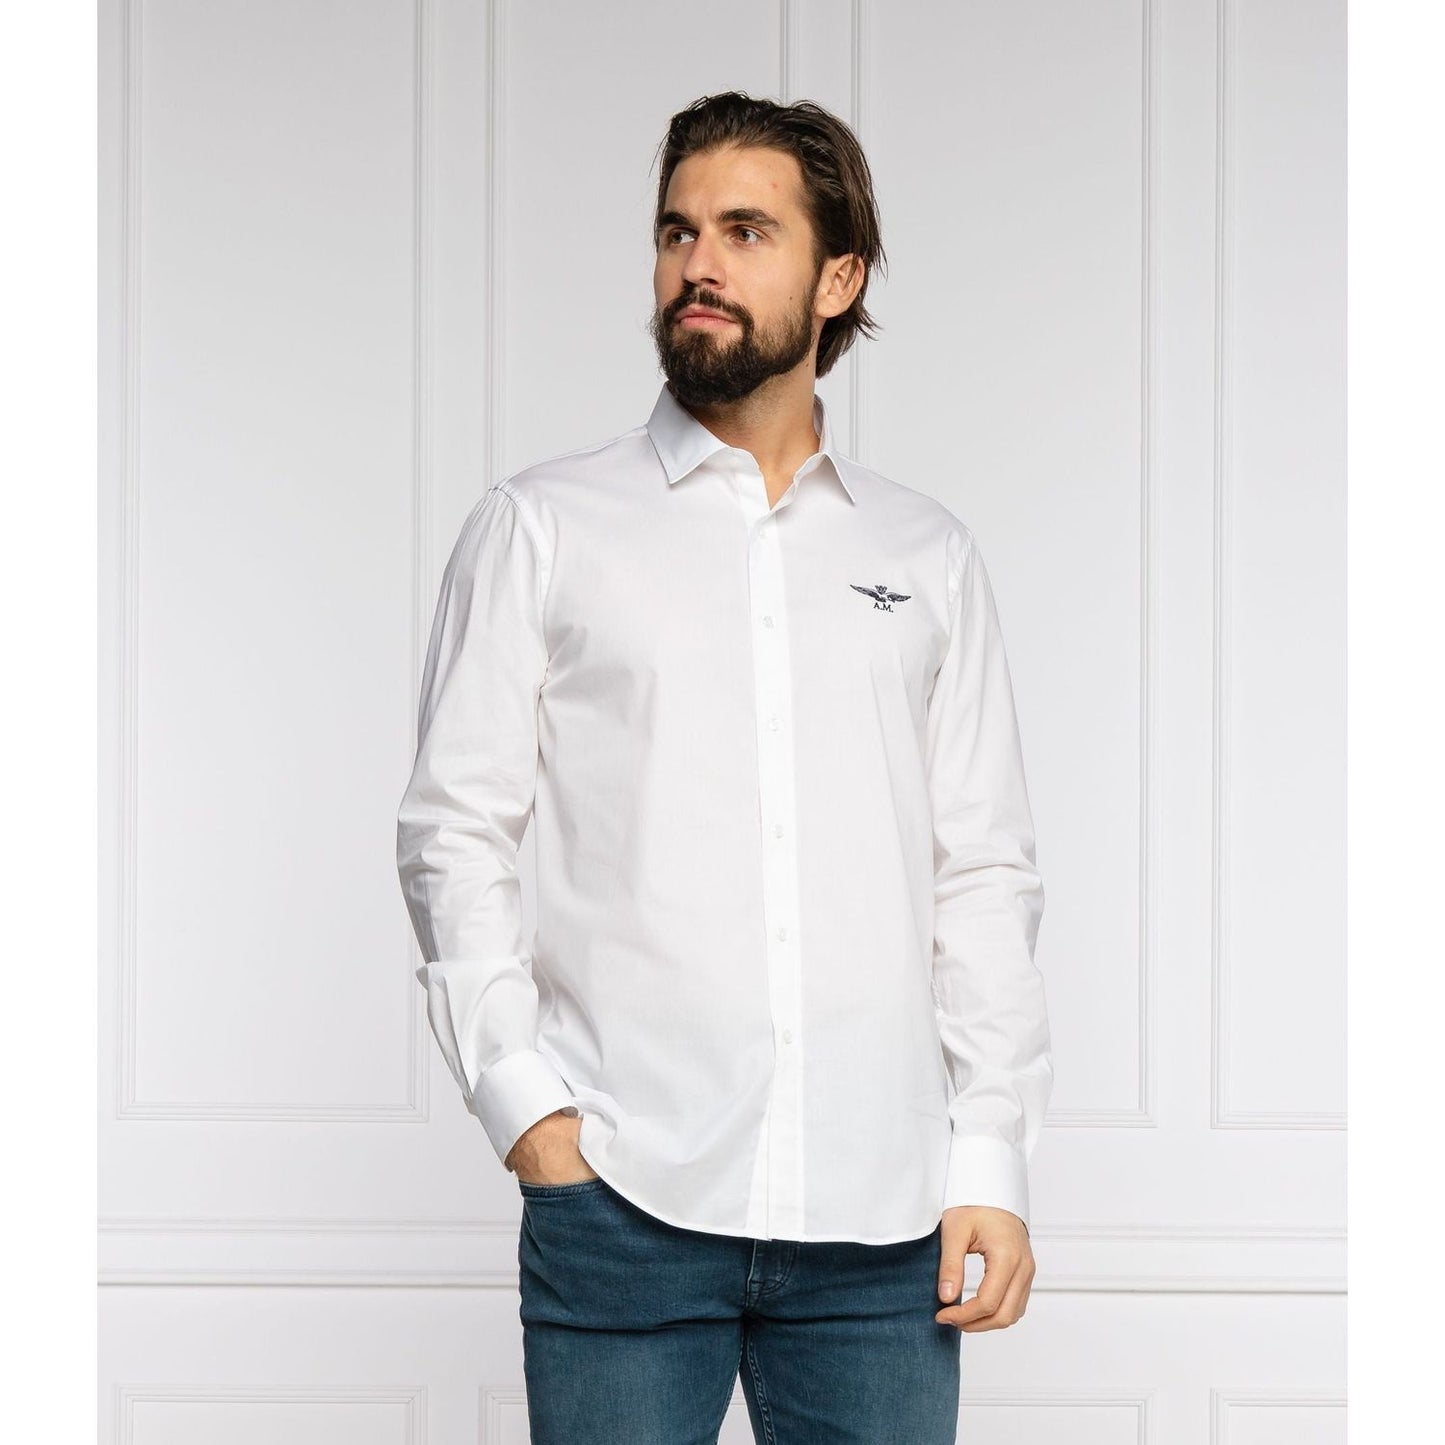 Aeronautica Militare Slim Fit White Cotton Shirt with Eagle Logo white-cotton-shirt-12 product-7878-167796871-5-51fa5335-806.jpg